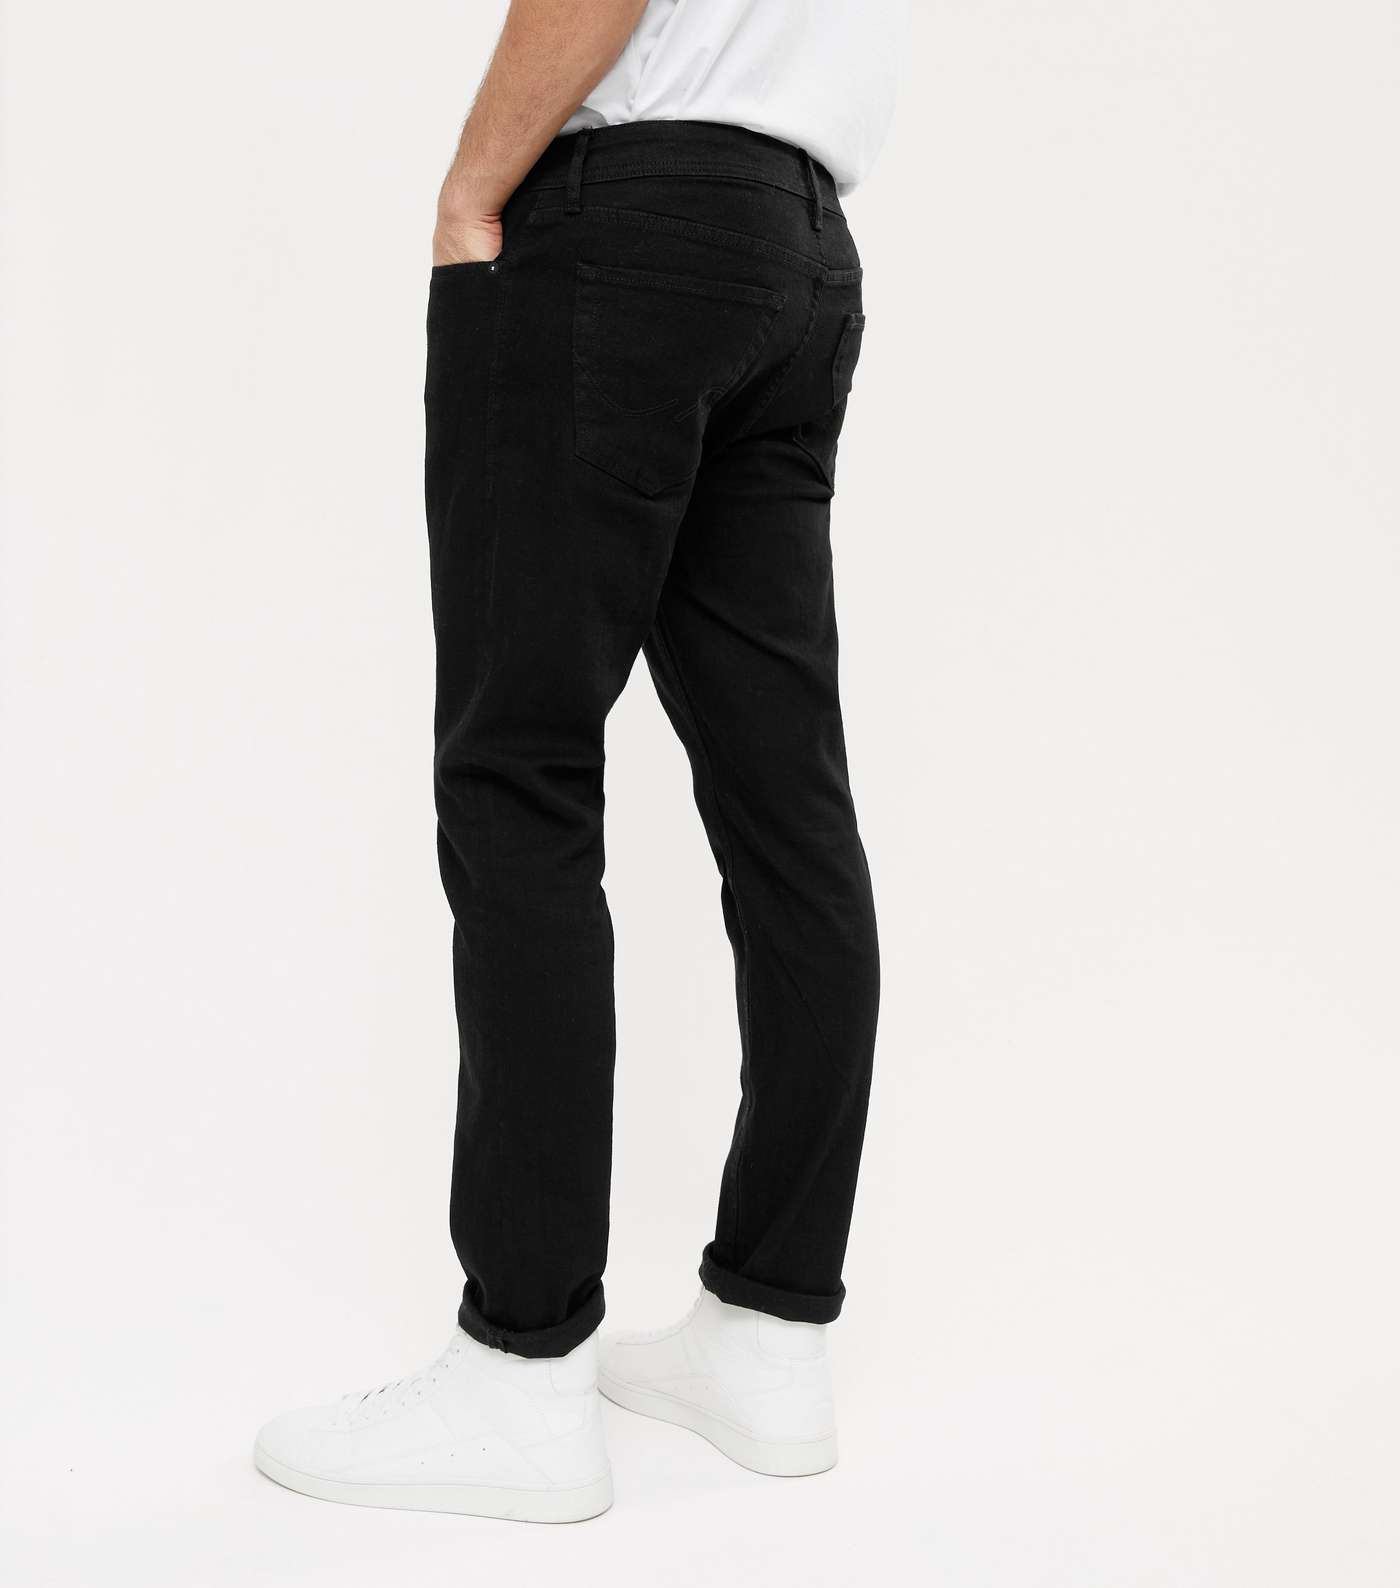 Jack & Jones Black Dark Wash Slim Fit Jeans Image 4